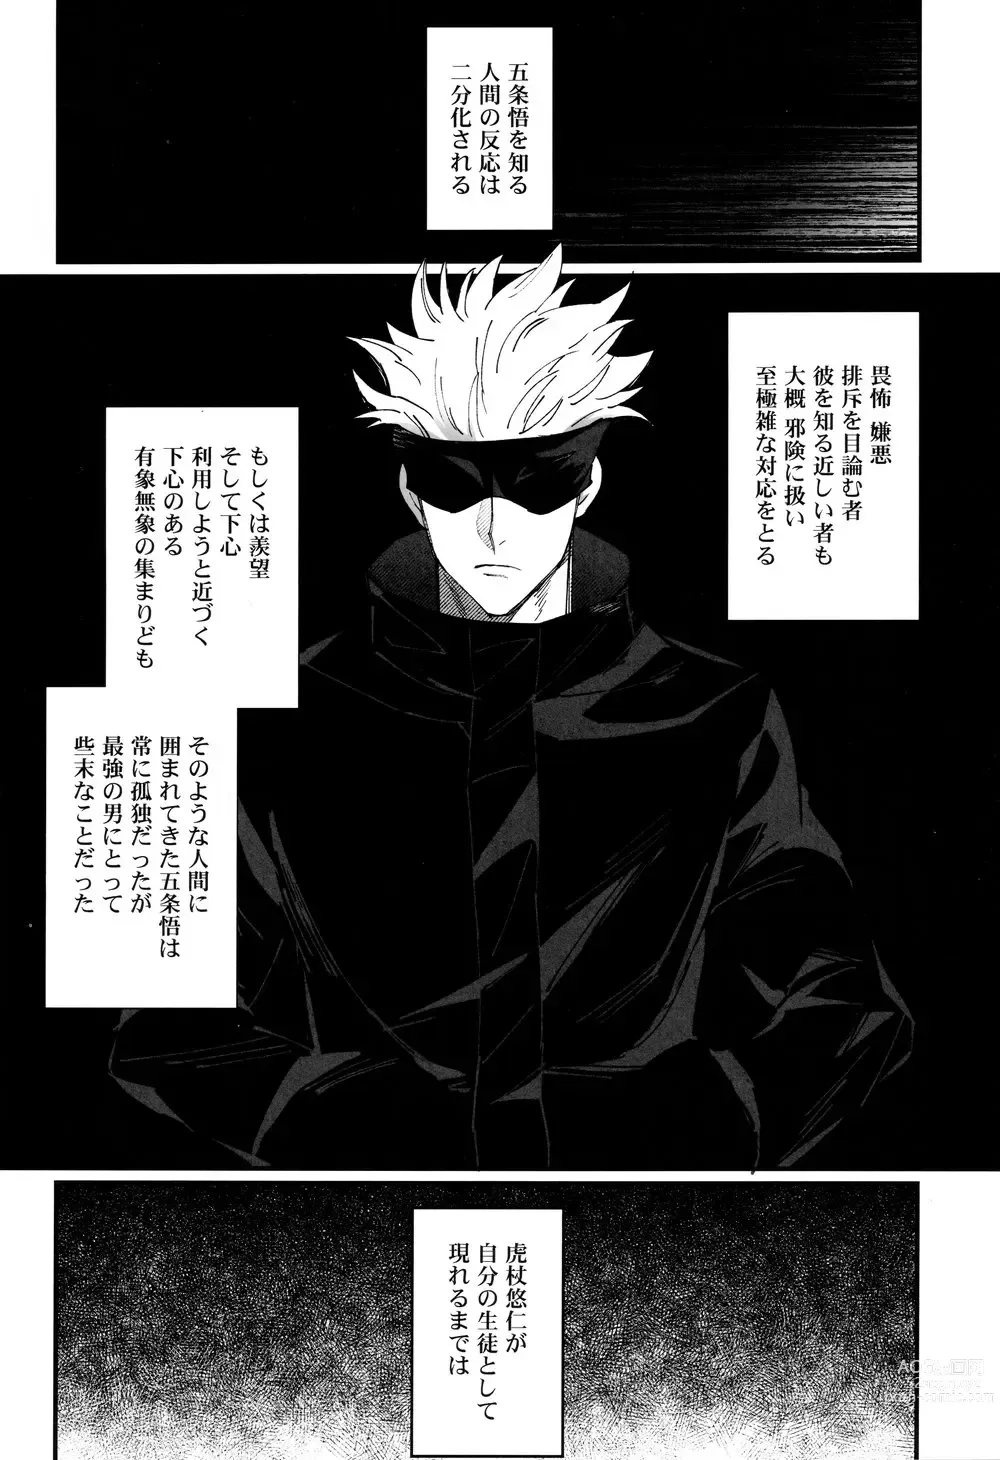 Page 4 of doujinshi Gachikoi Monster